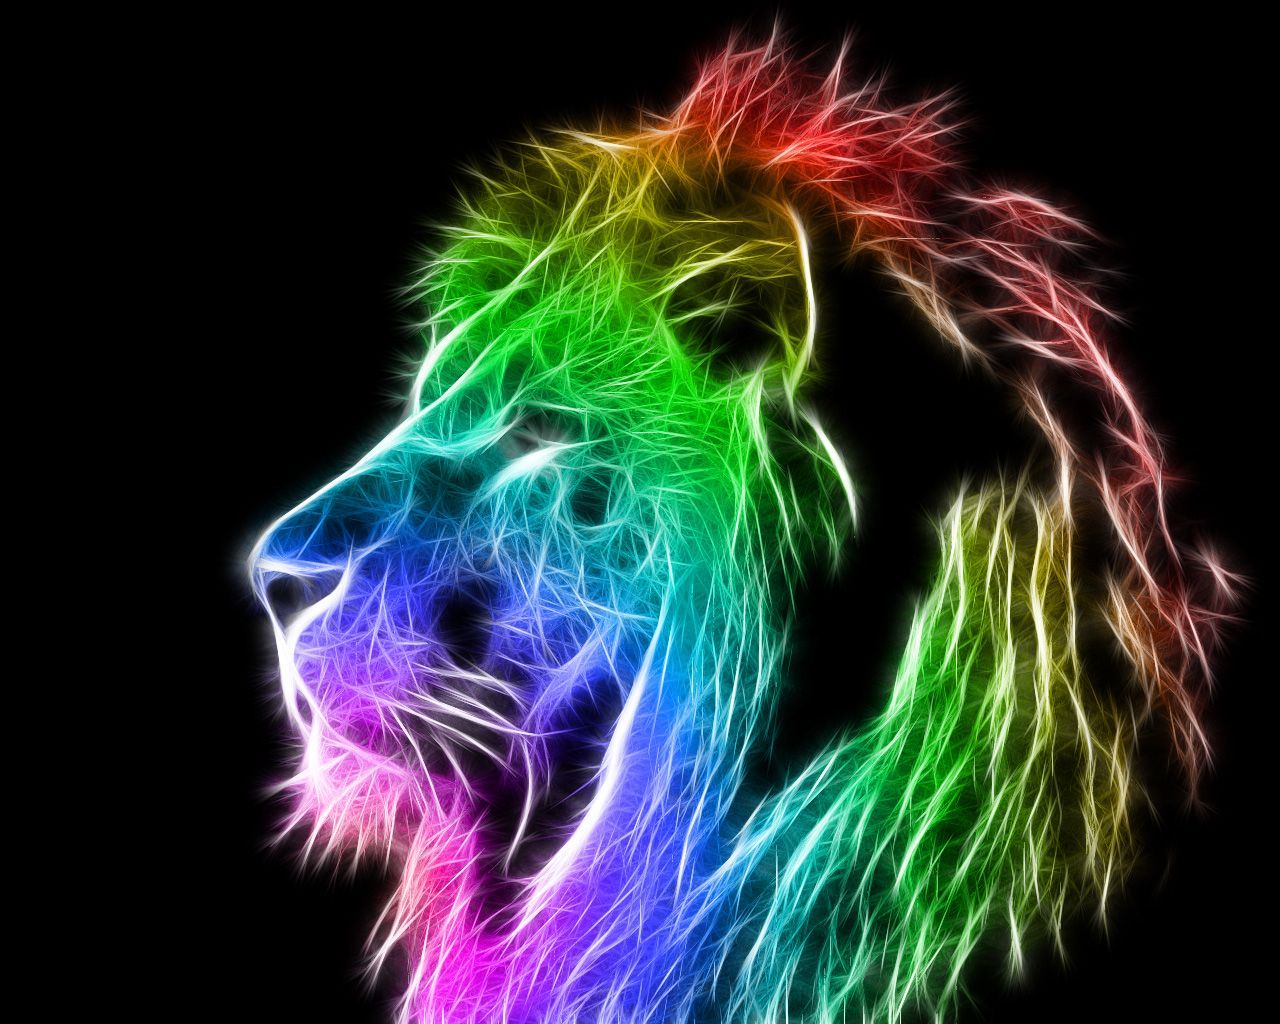 Colorful Lion Wallpaperx1024. Colorful lion, Rainbow lion, Abstract lion